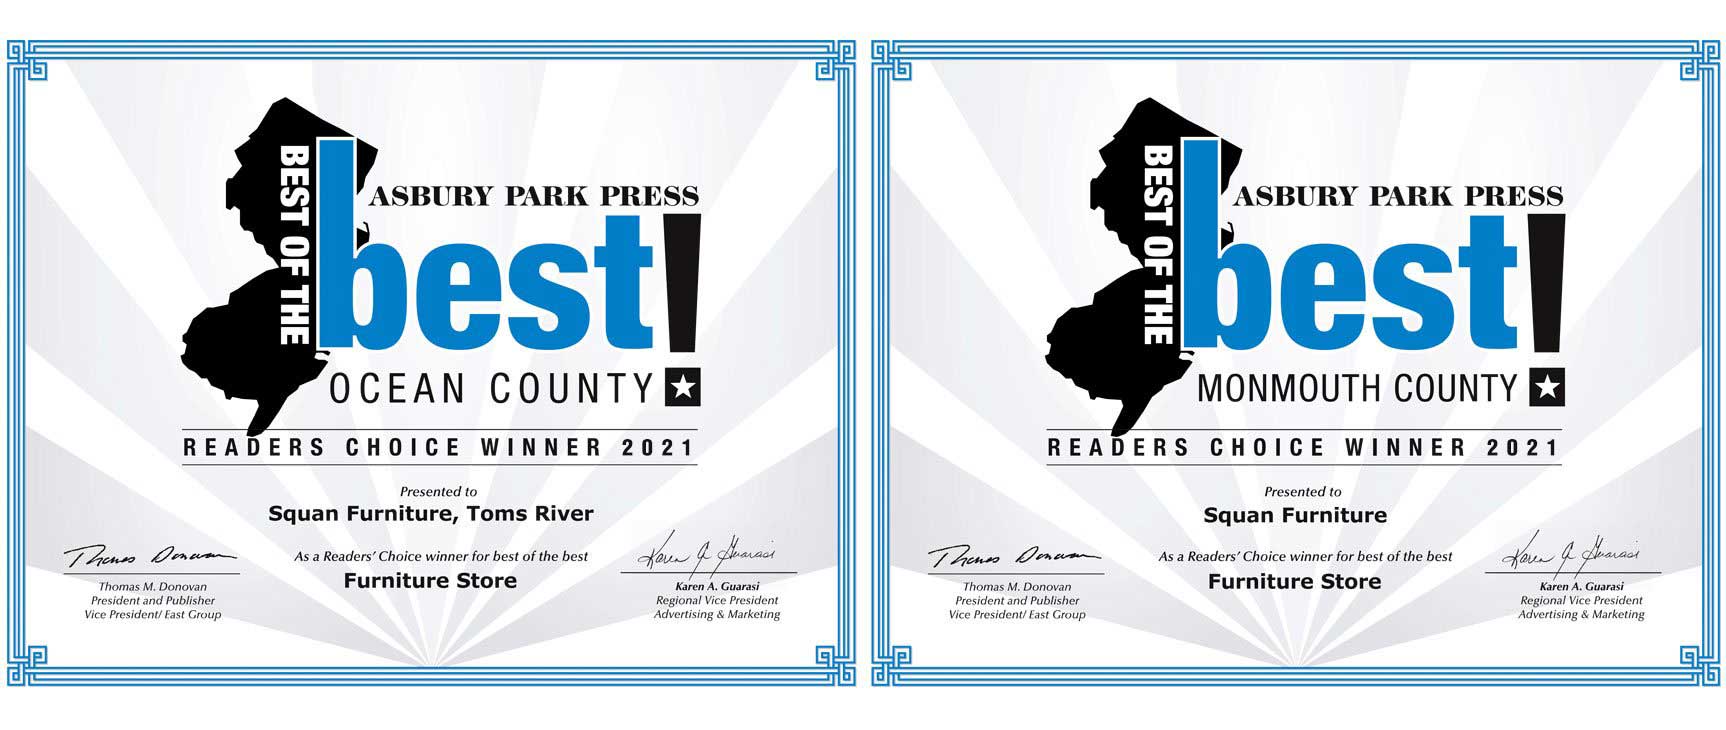 Asbury Park Press Best of the Best Award Winner Squan Furniture